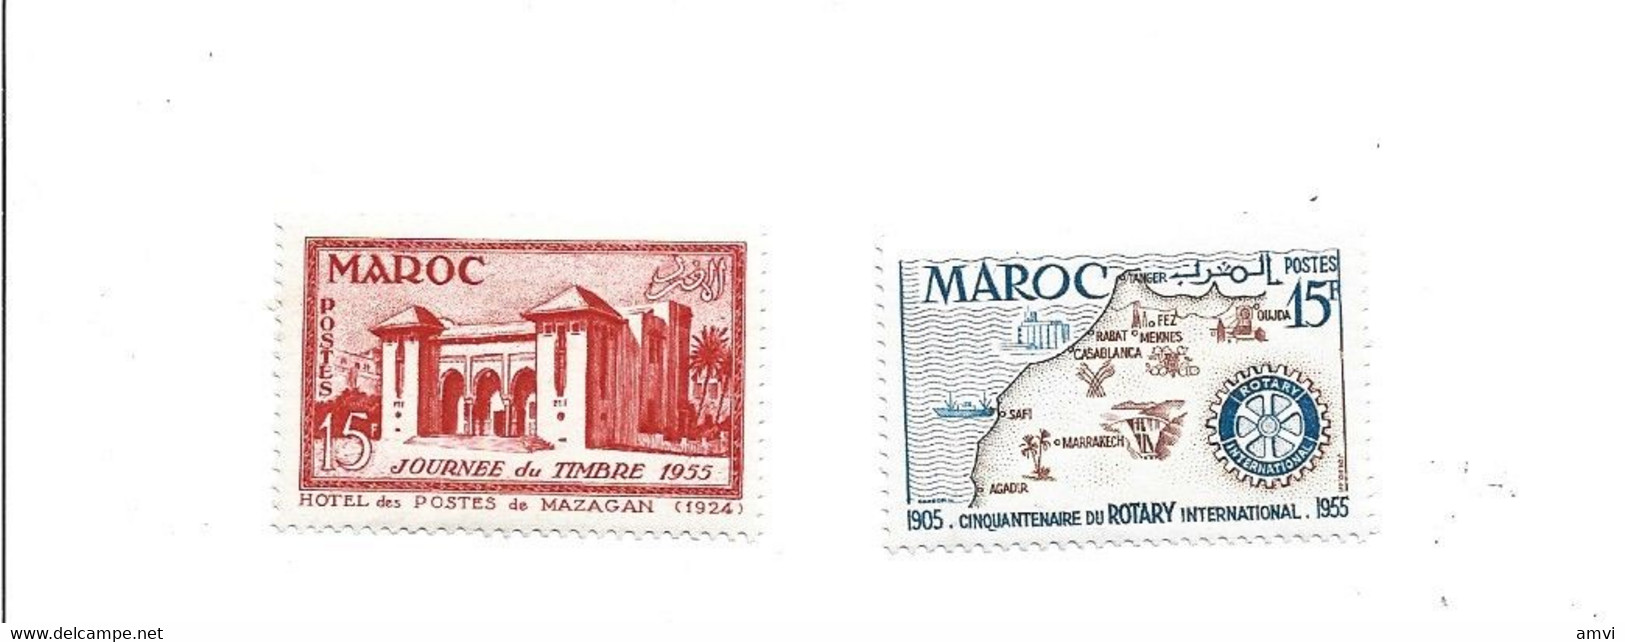 22- 5 - 1102 Maroc Timbres Neufs ** 344 Et 343  Centenaire Du Rotary International - HOTEL DES POSTES DE MAZAGAN - Ungebraucht